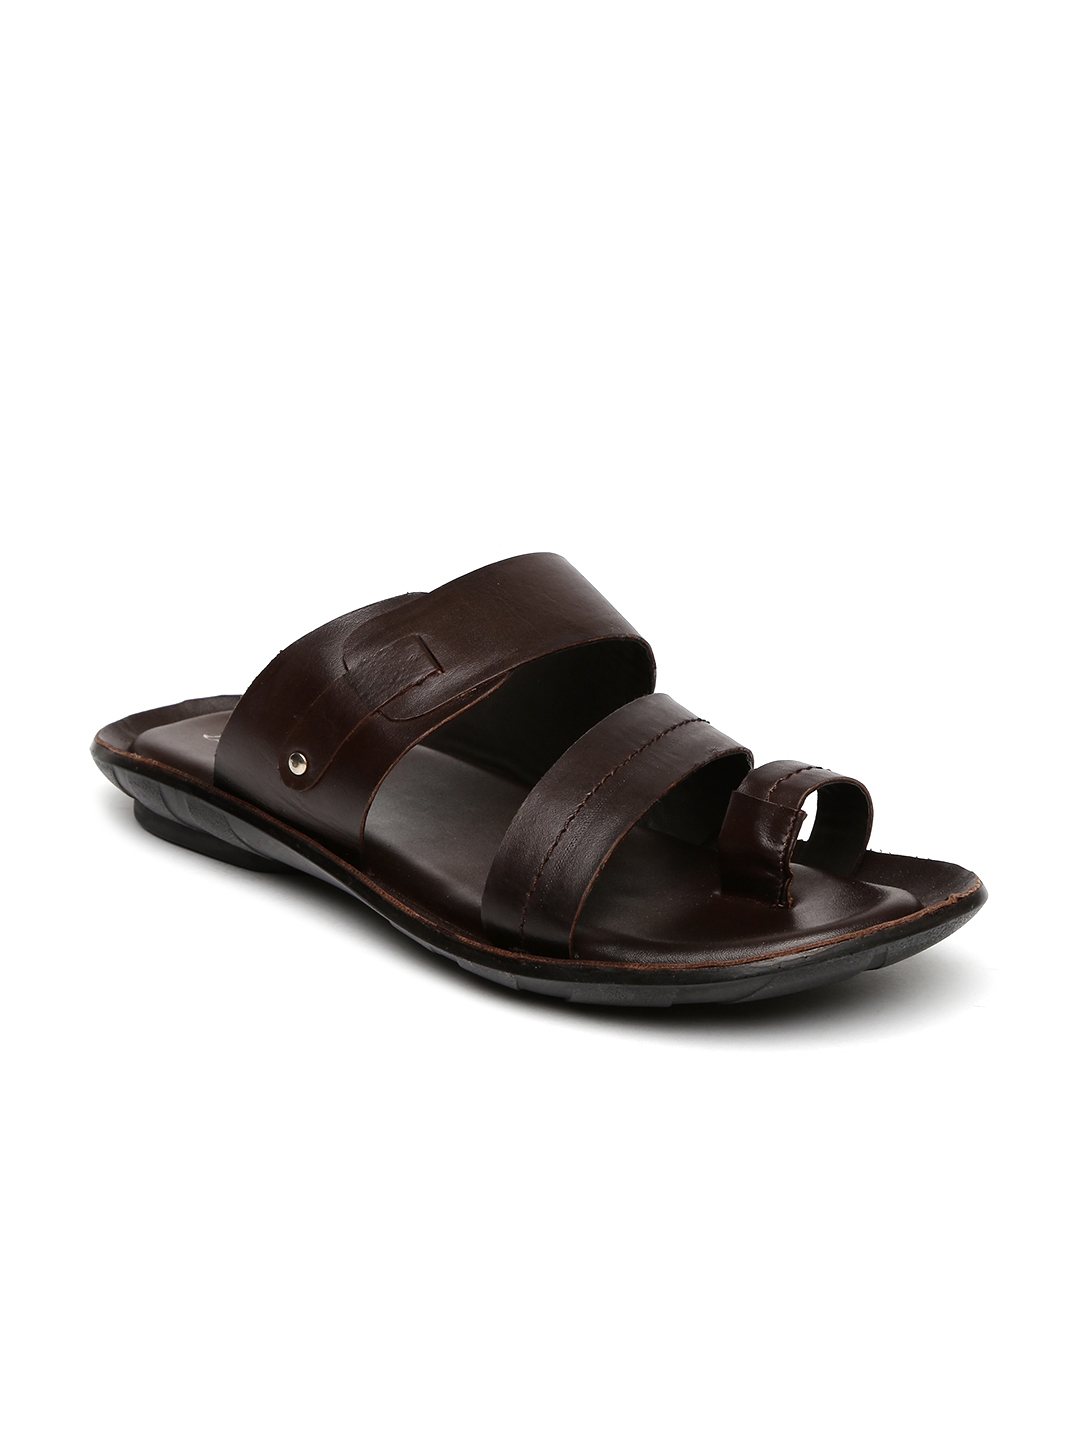 Buy Bata Men Brown Zodiac Sandals - Sandals for Men 1537514 | Myntra